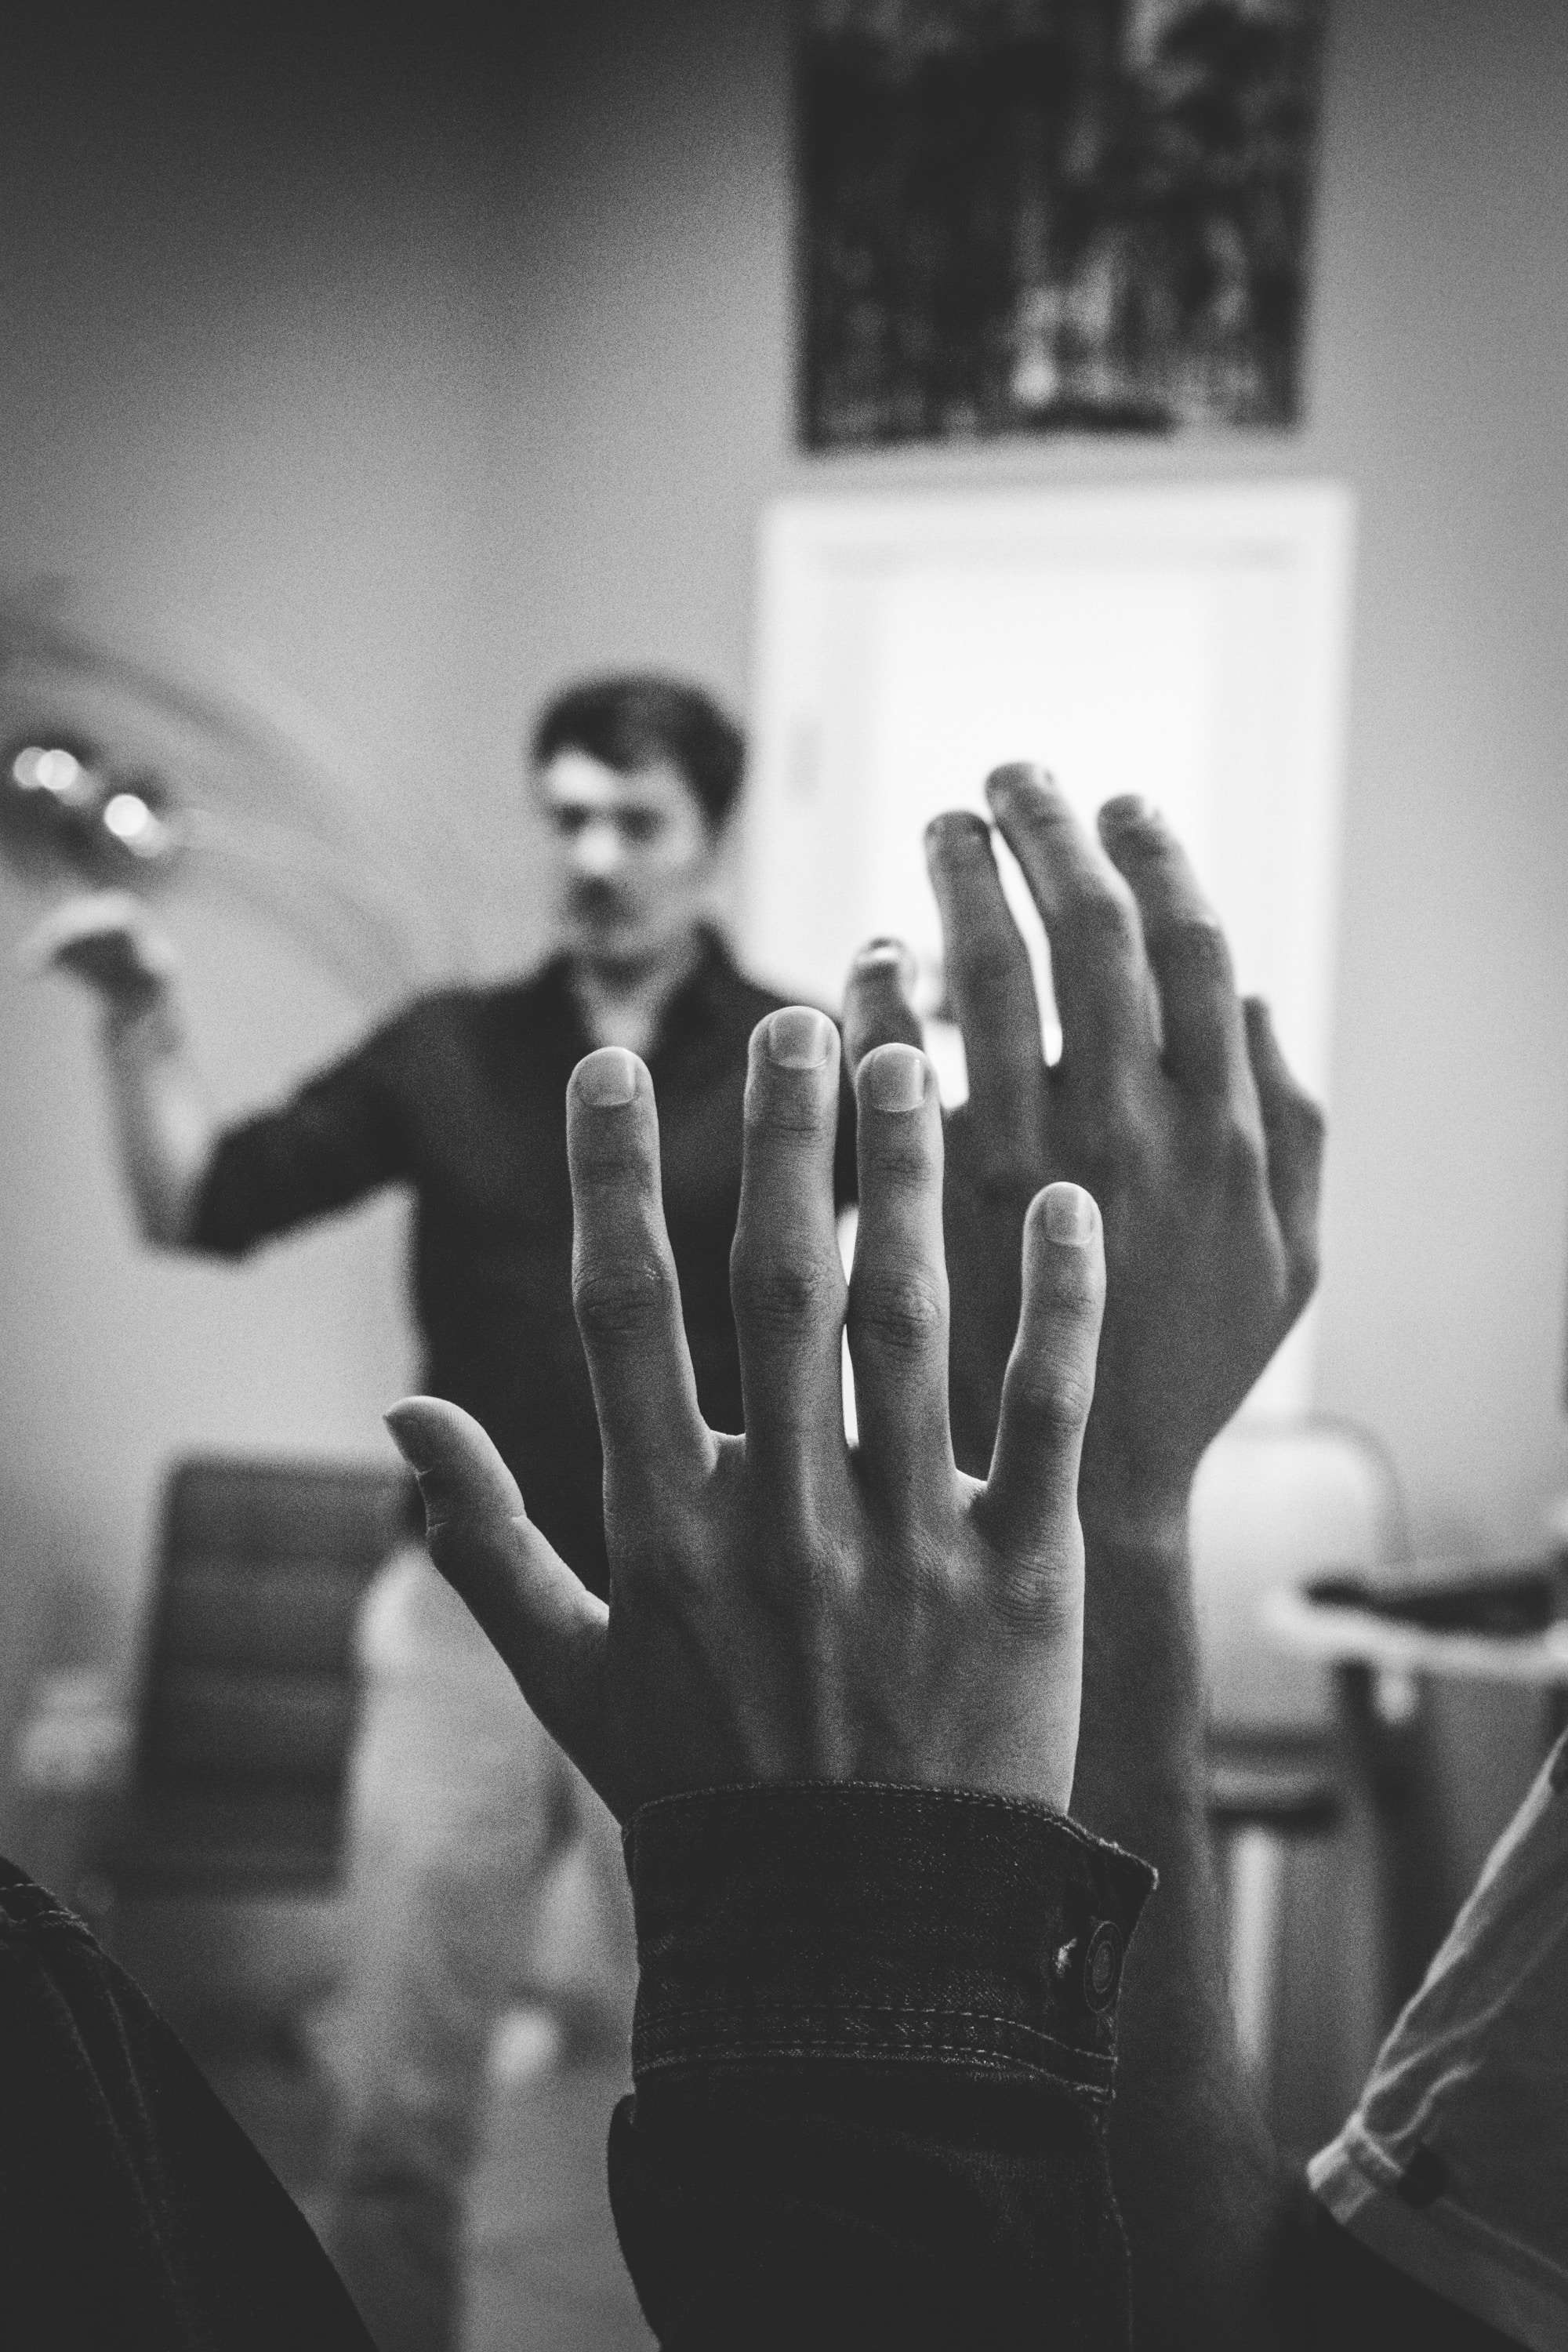 Hands raised in a classroom. Photo by Artem Maltsev